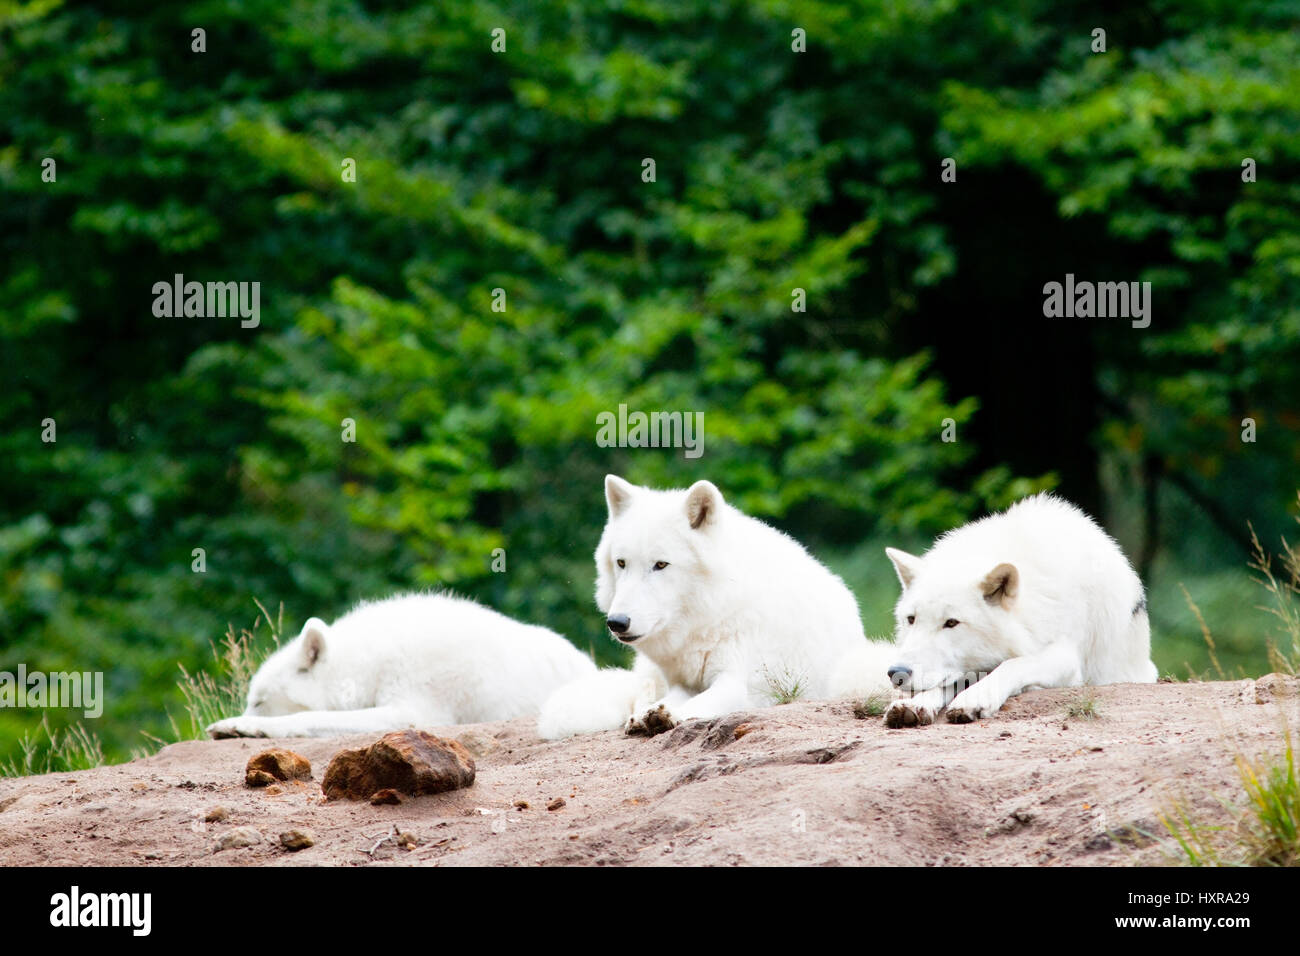 La tundra lupi, Canis lupus albus, mediante pubblicazione vantarsi: parco giochi vecchi Fasanerie Klein-Auheim, Tundrawölfe,Canis lupus albus, bei Veröffentlichung angeb Foto Stock